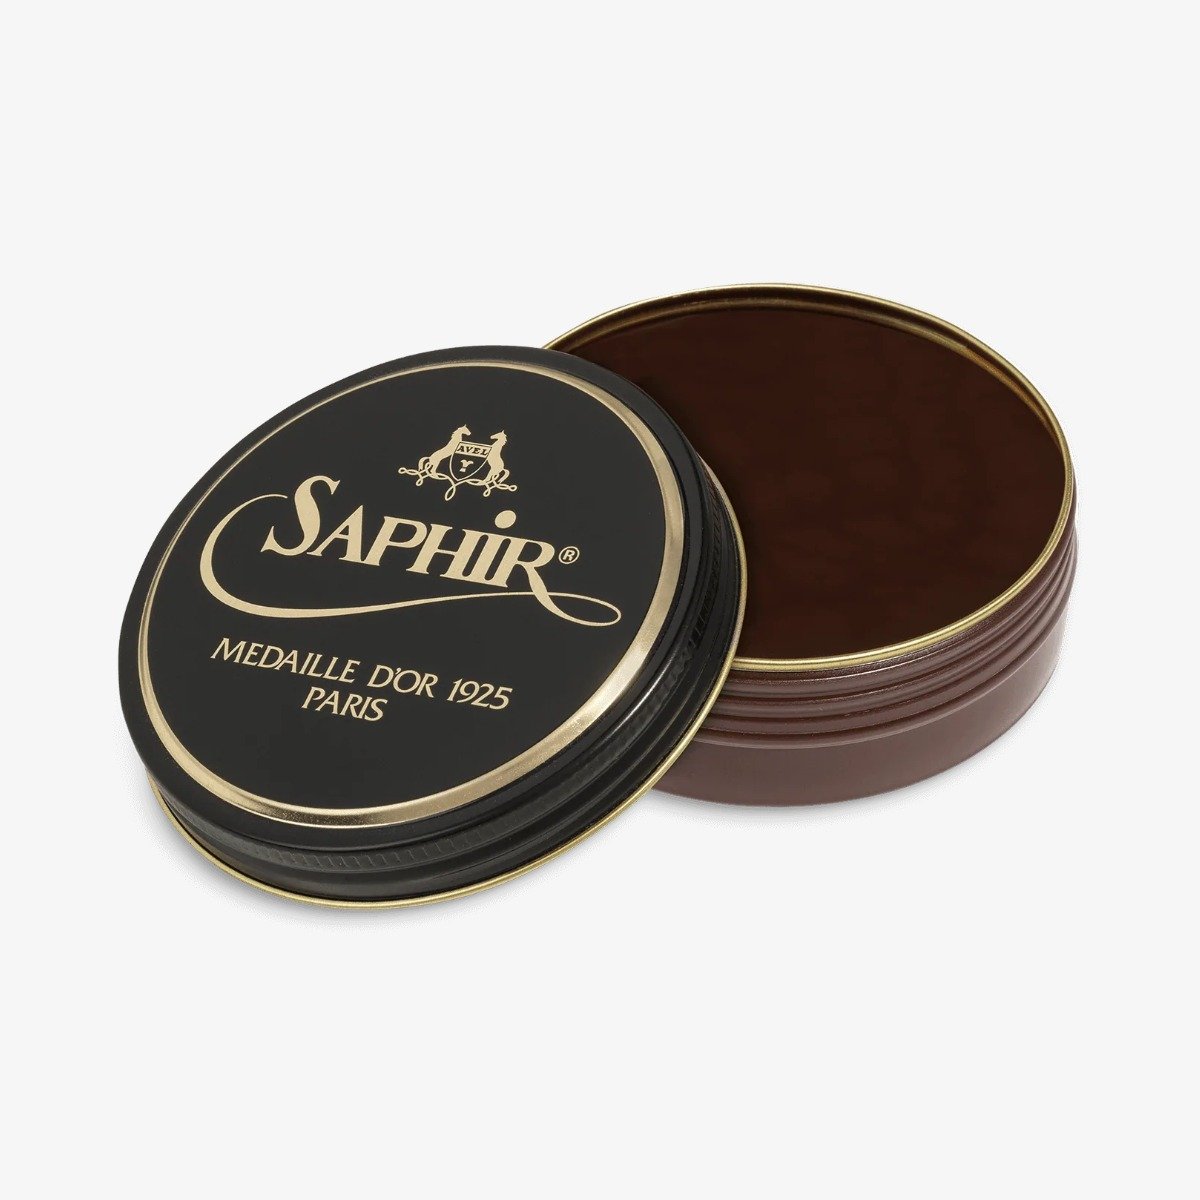 Saphir Pâte De Luxe medium brown wax polish